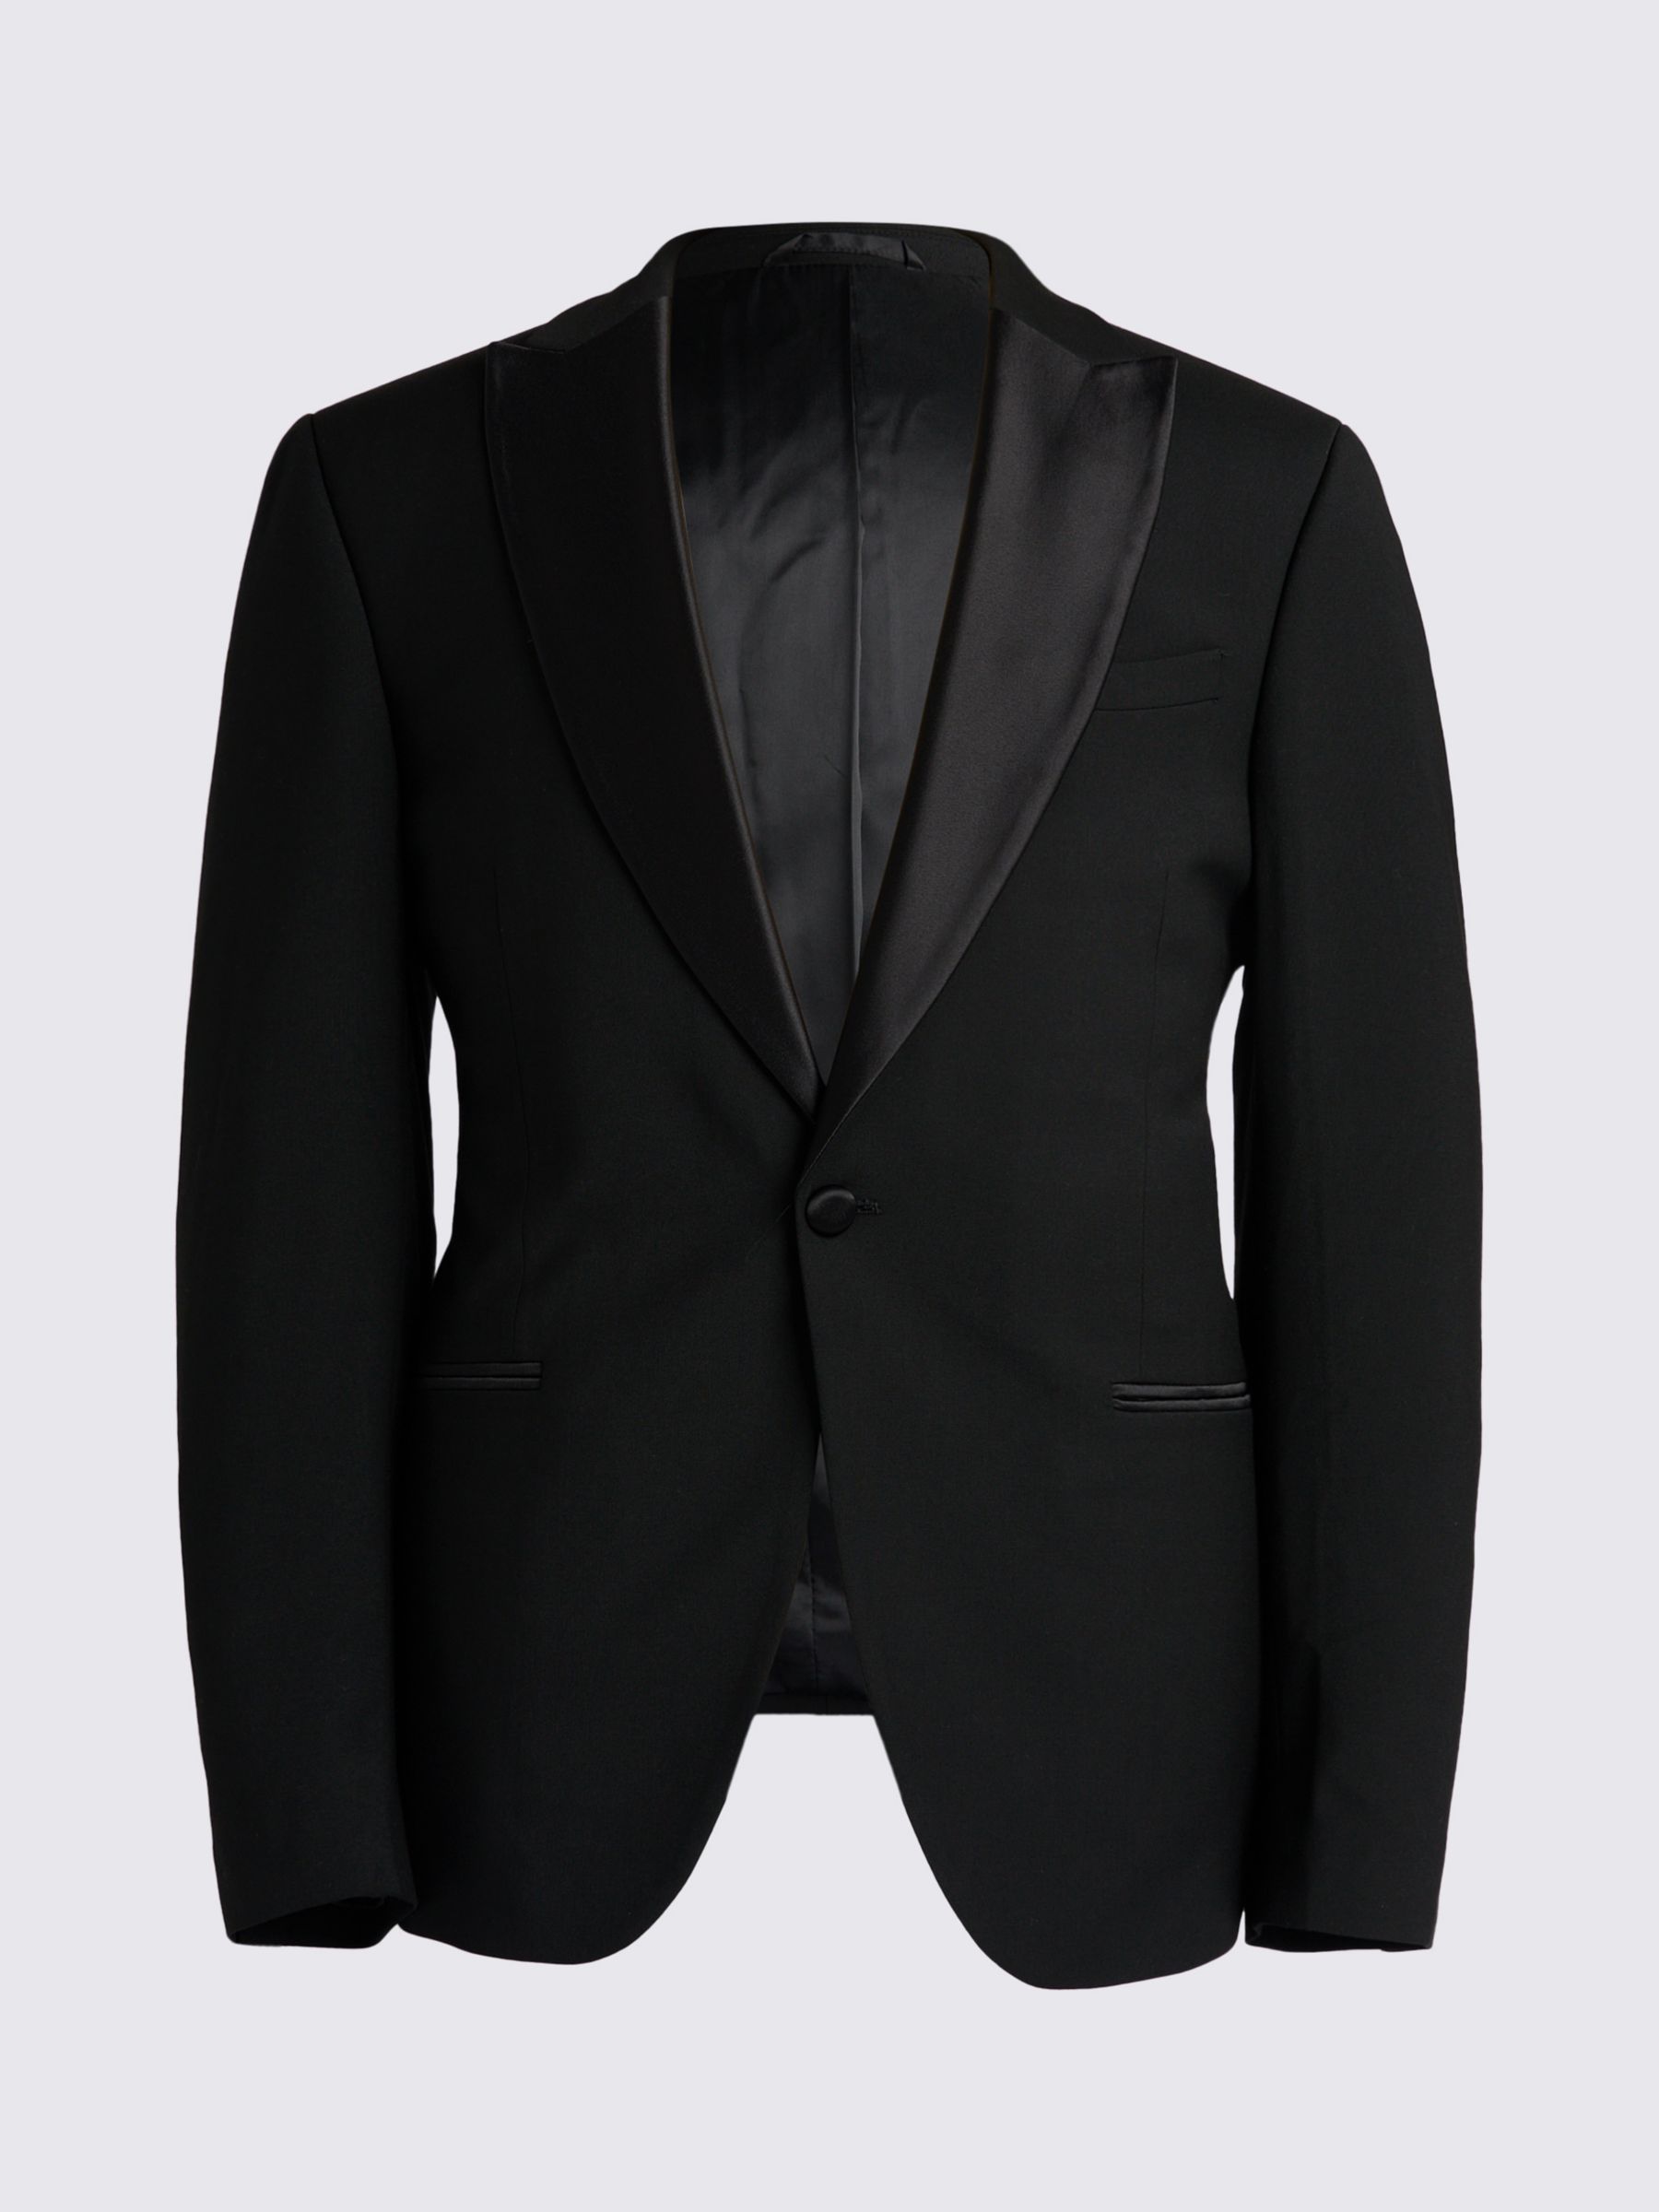 Moss Slim Fit Peak Lapel Tuxedo Jacket, Black at John Lewis & Partners